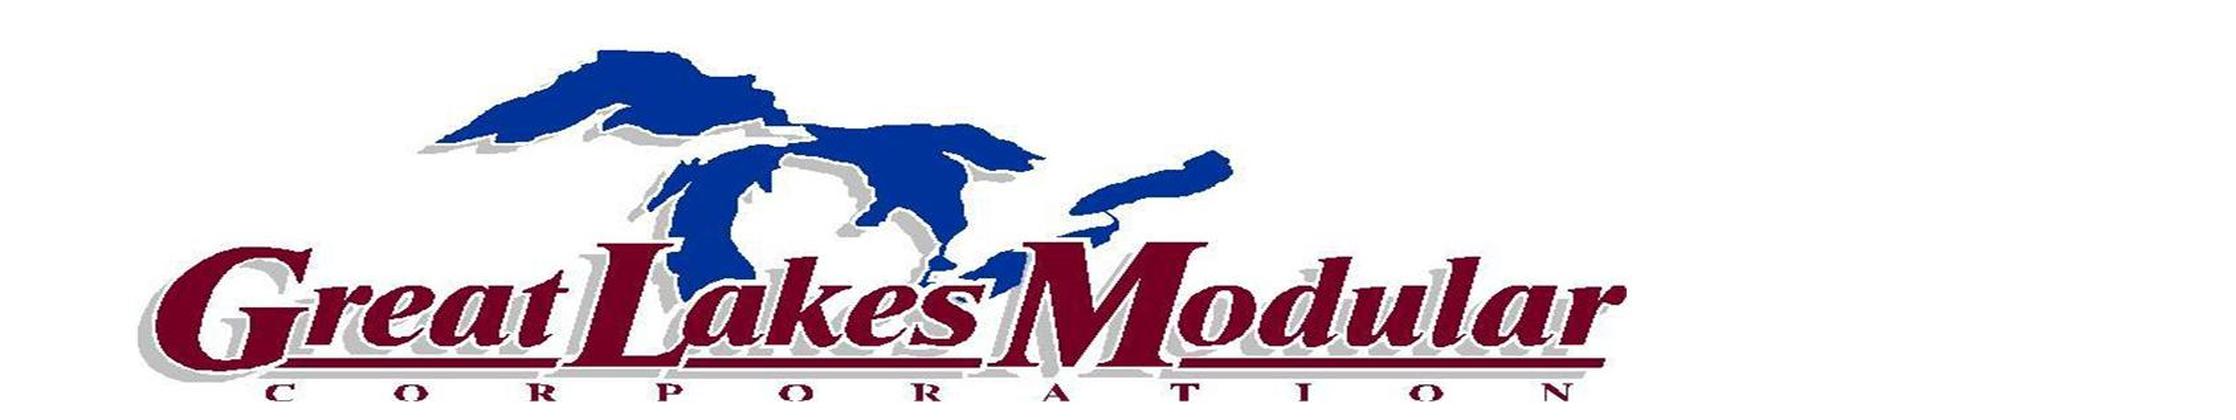 Great Lakes Modular Corp.